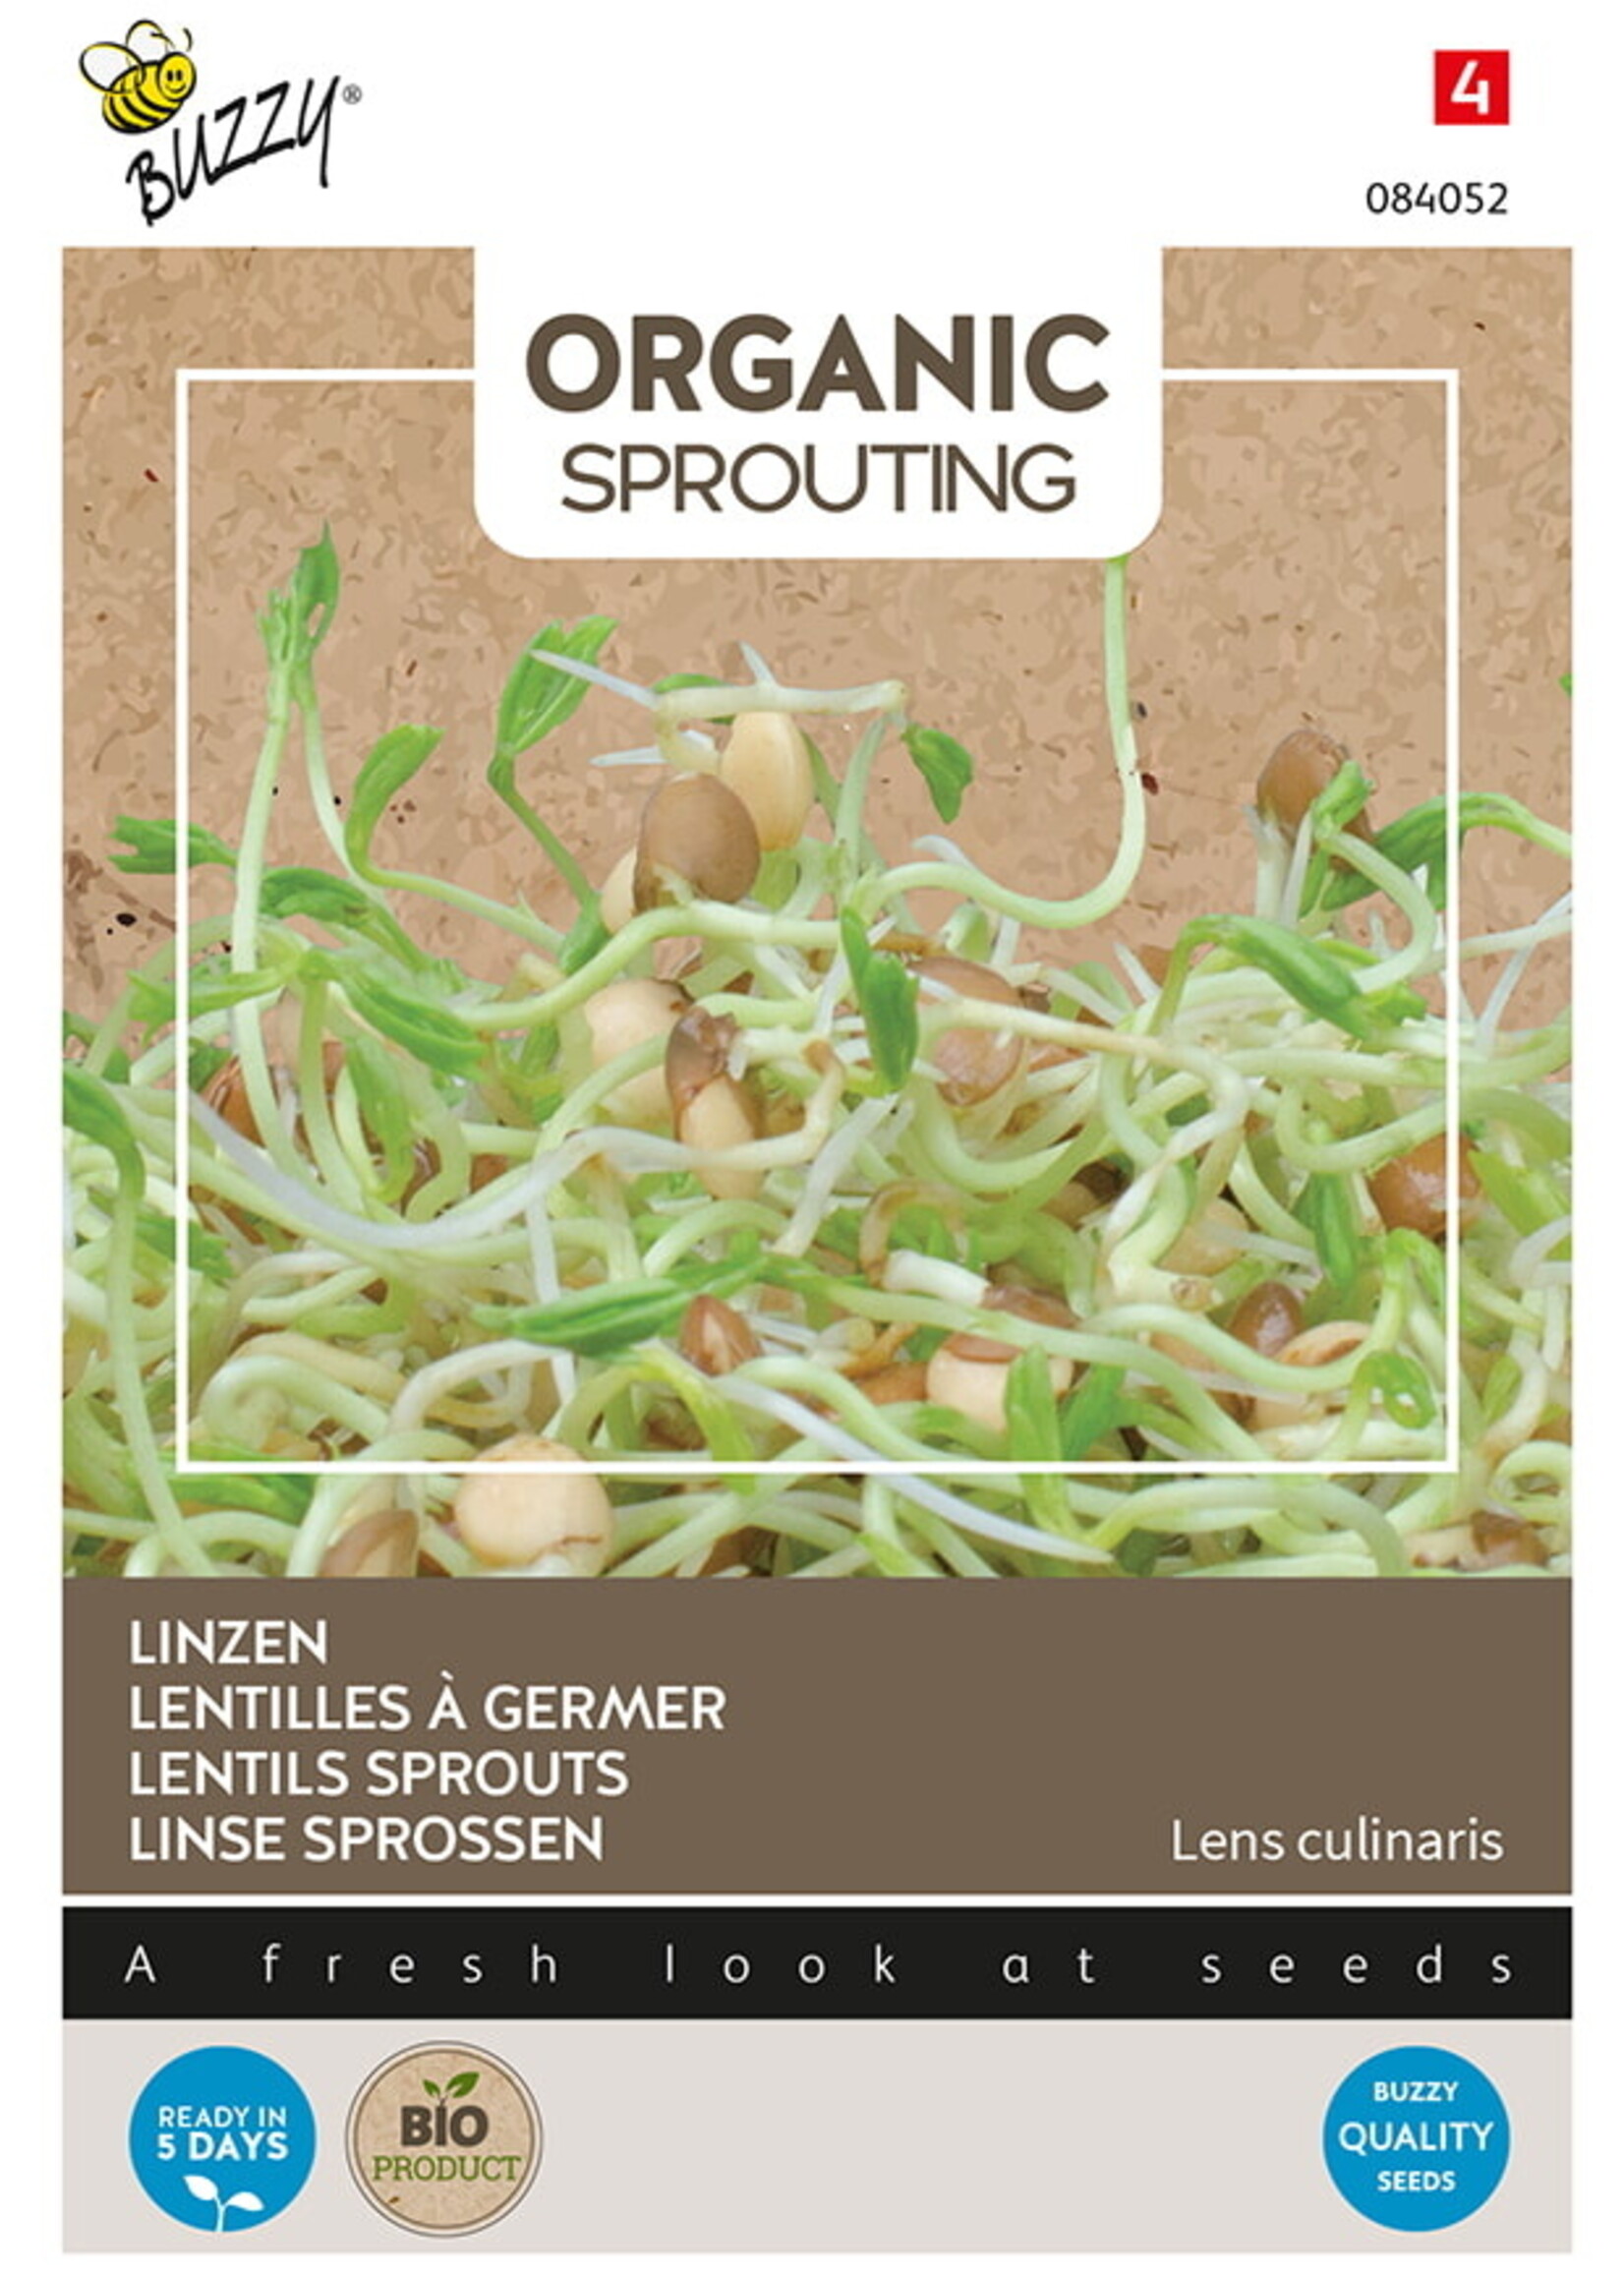 Buzzy Organic Sprouting Linzen